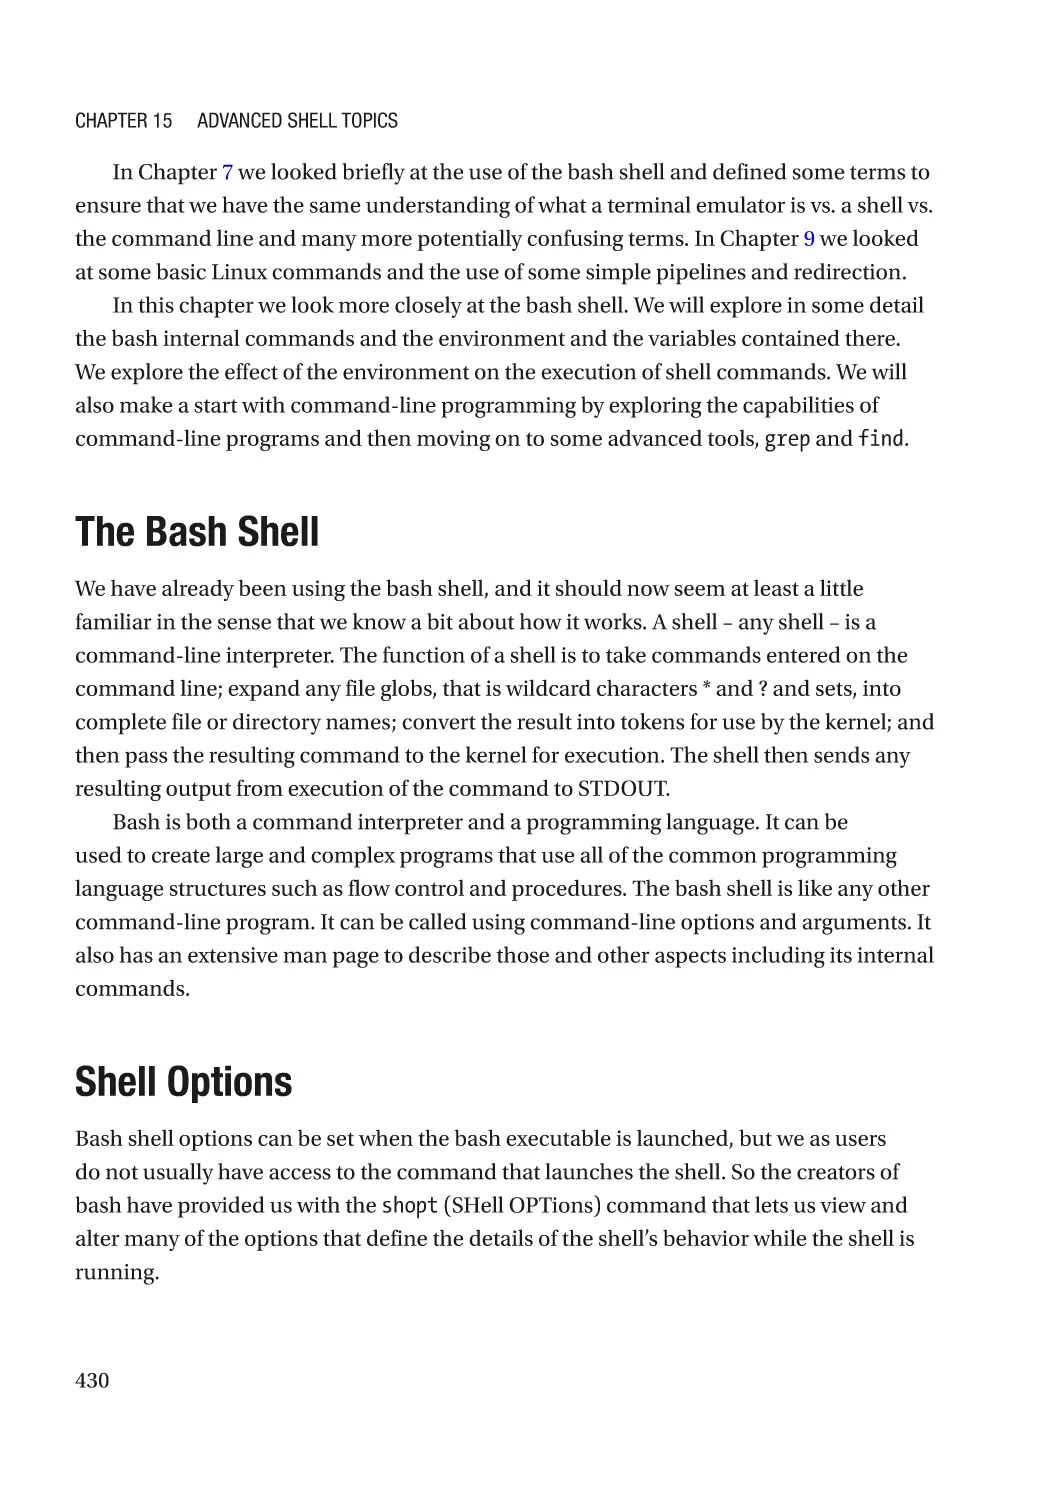 The Bash Shell
Shell Options